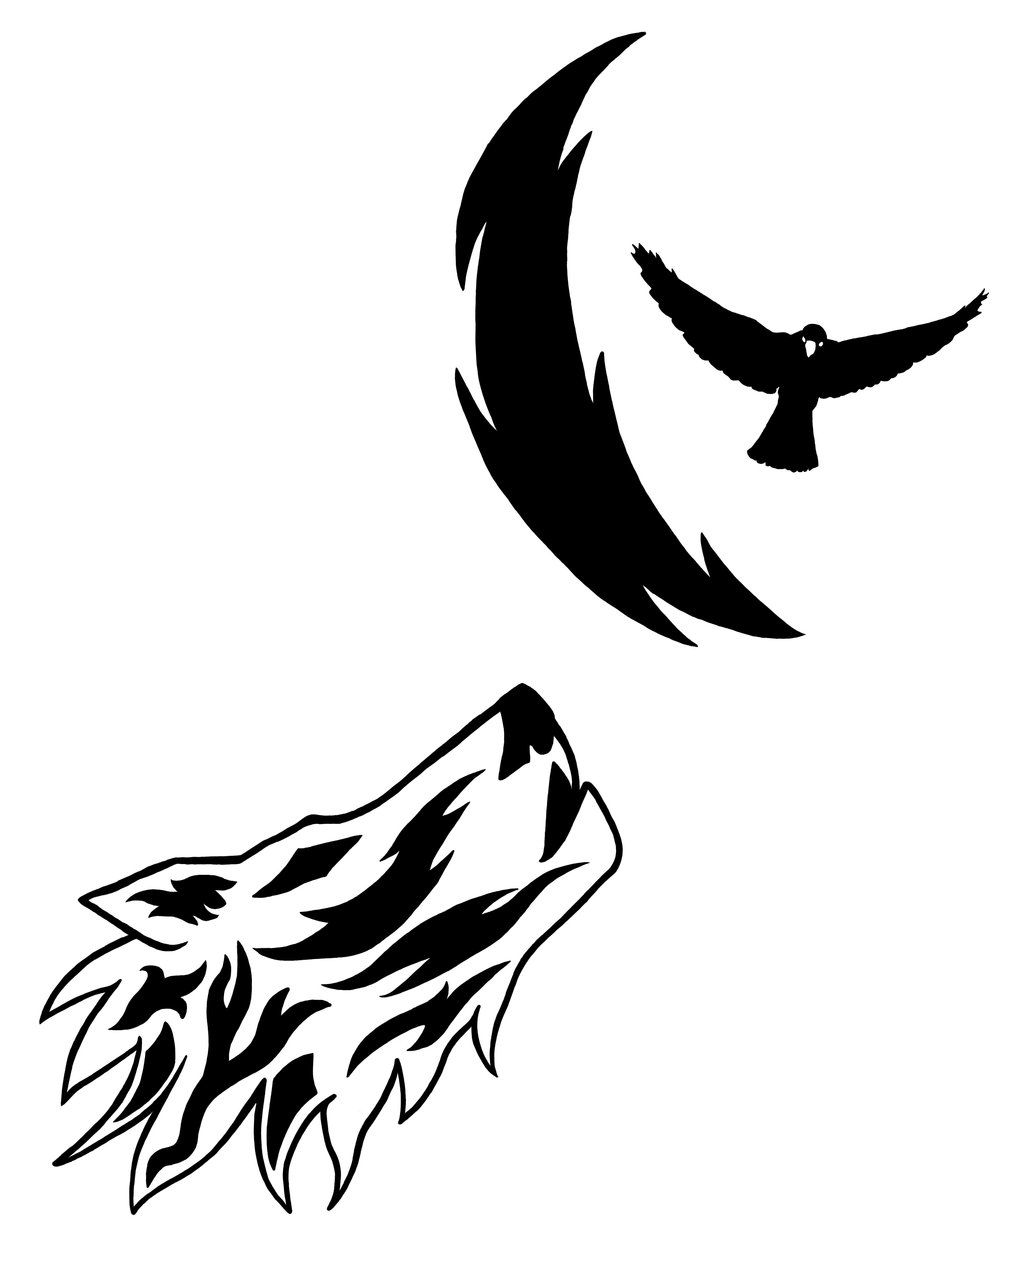 First tattoo - Wolf Moon Crow by Crazy-Black-Wolf on deviantART